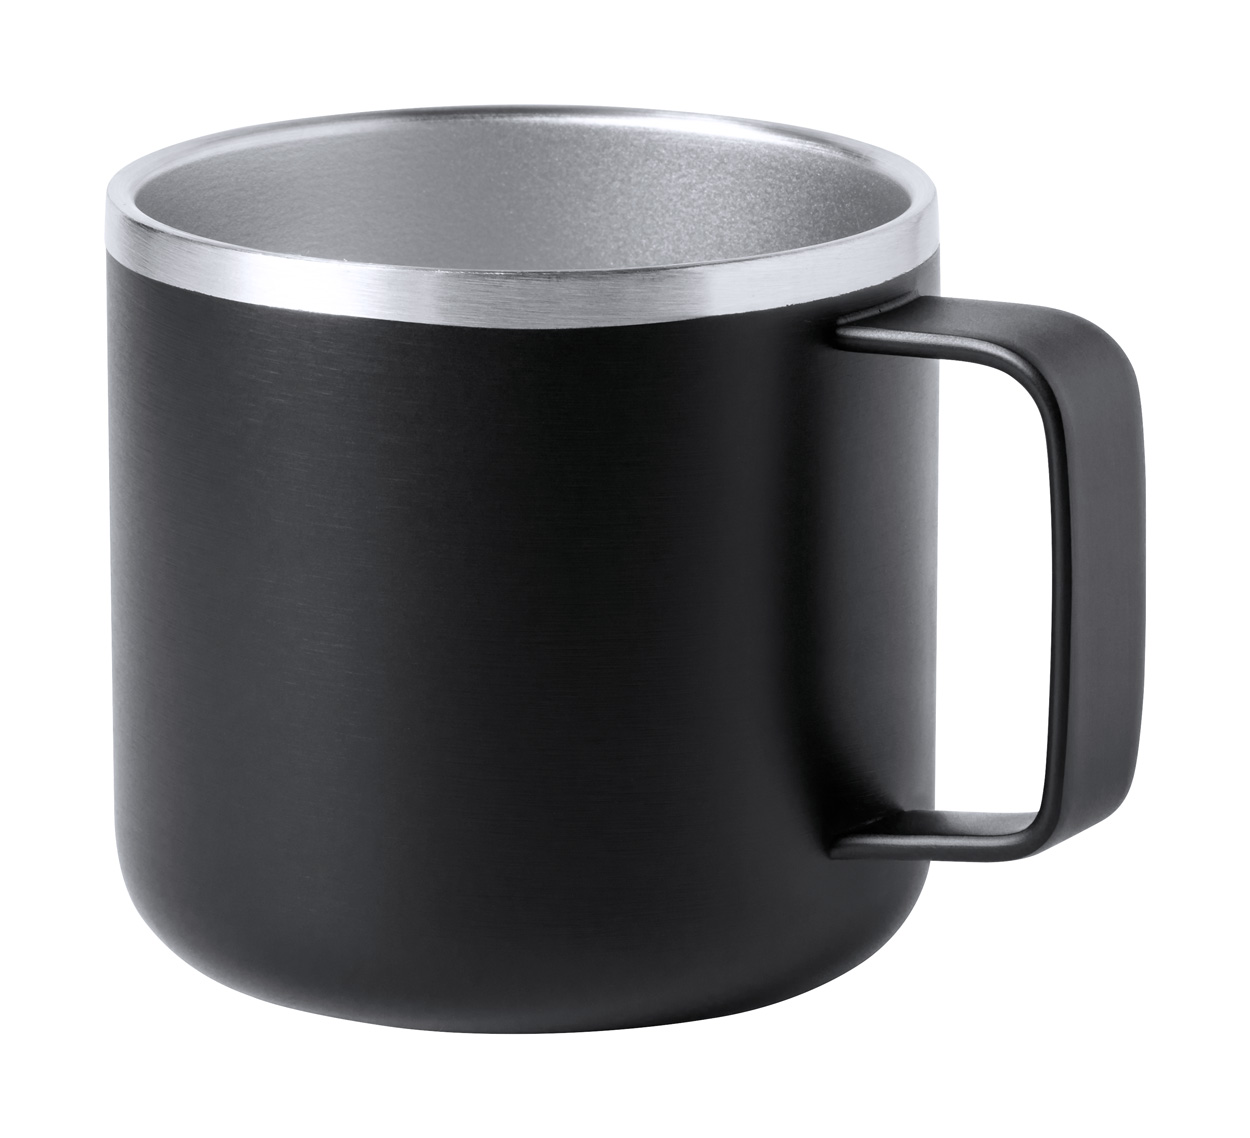 Shirley stainless steel mug - black